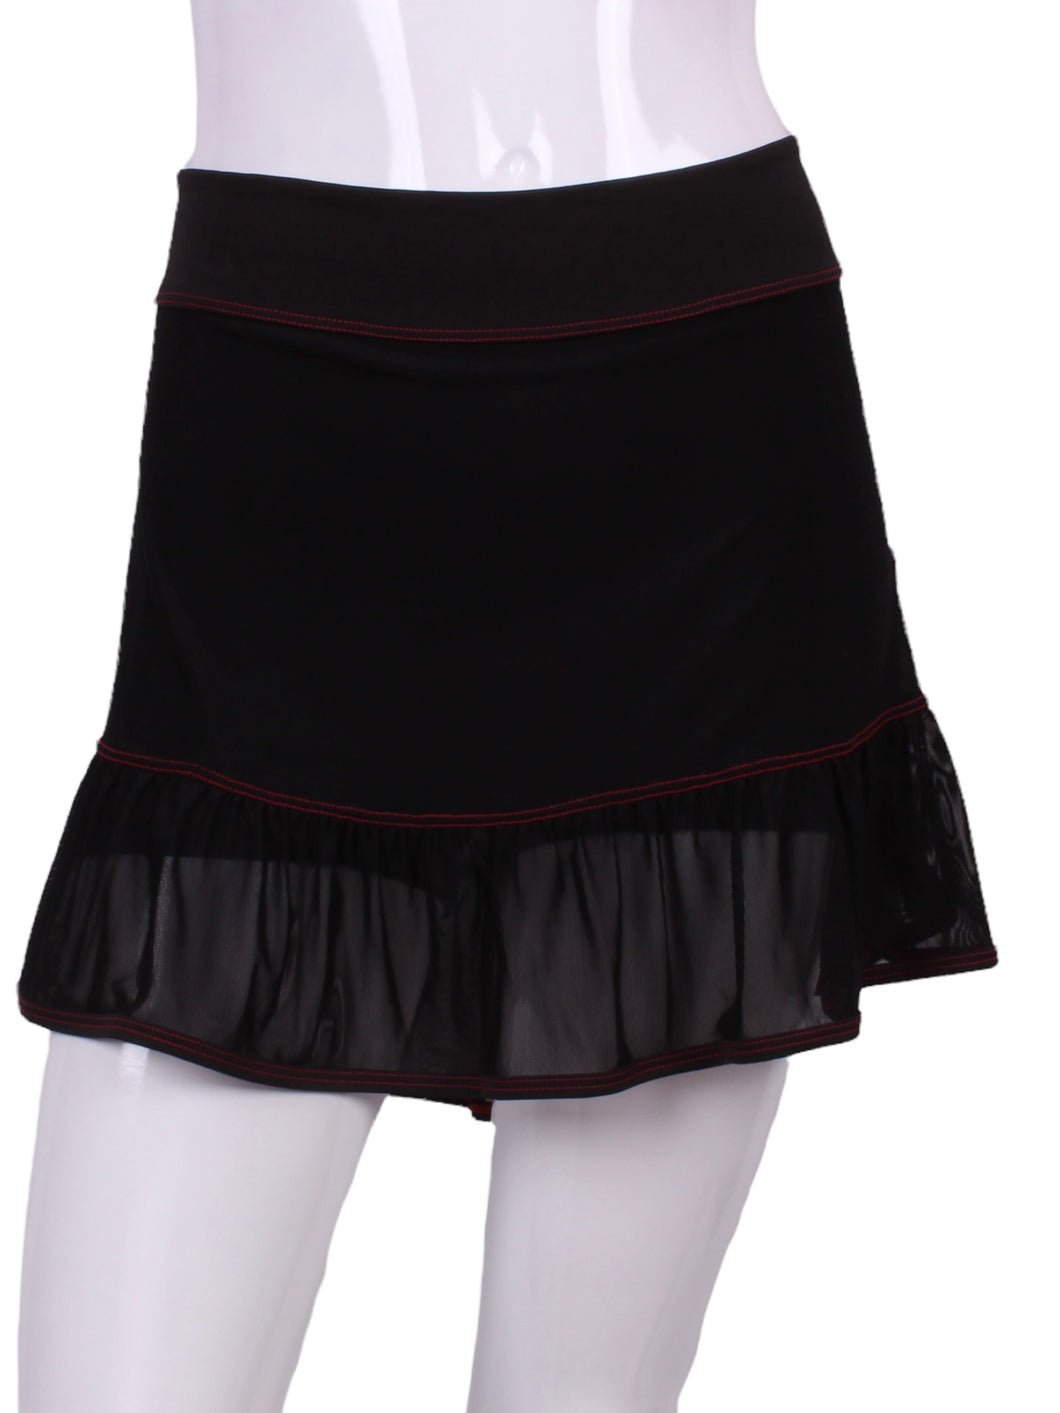 Black Mesh Ruffle Skirt Red Stitching - I LOVE MY DOUBLES PARTNER!!!